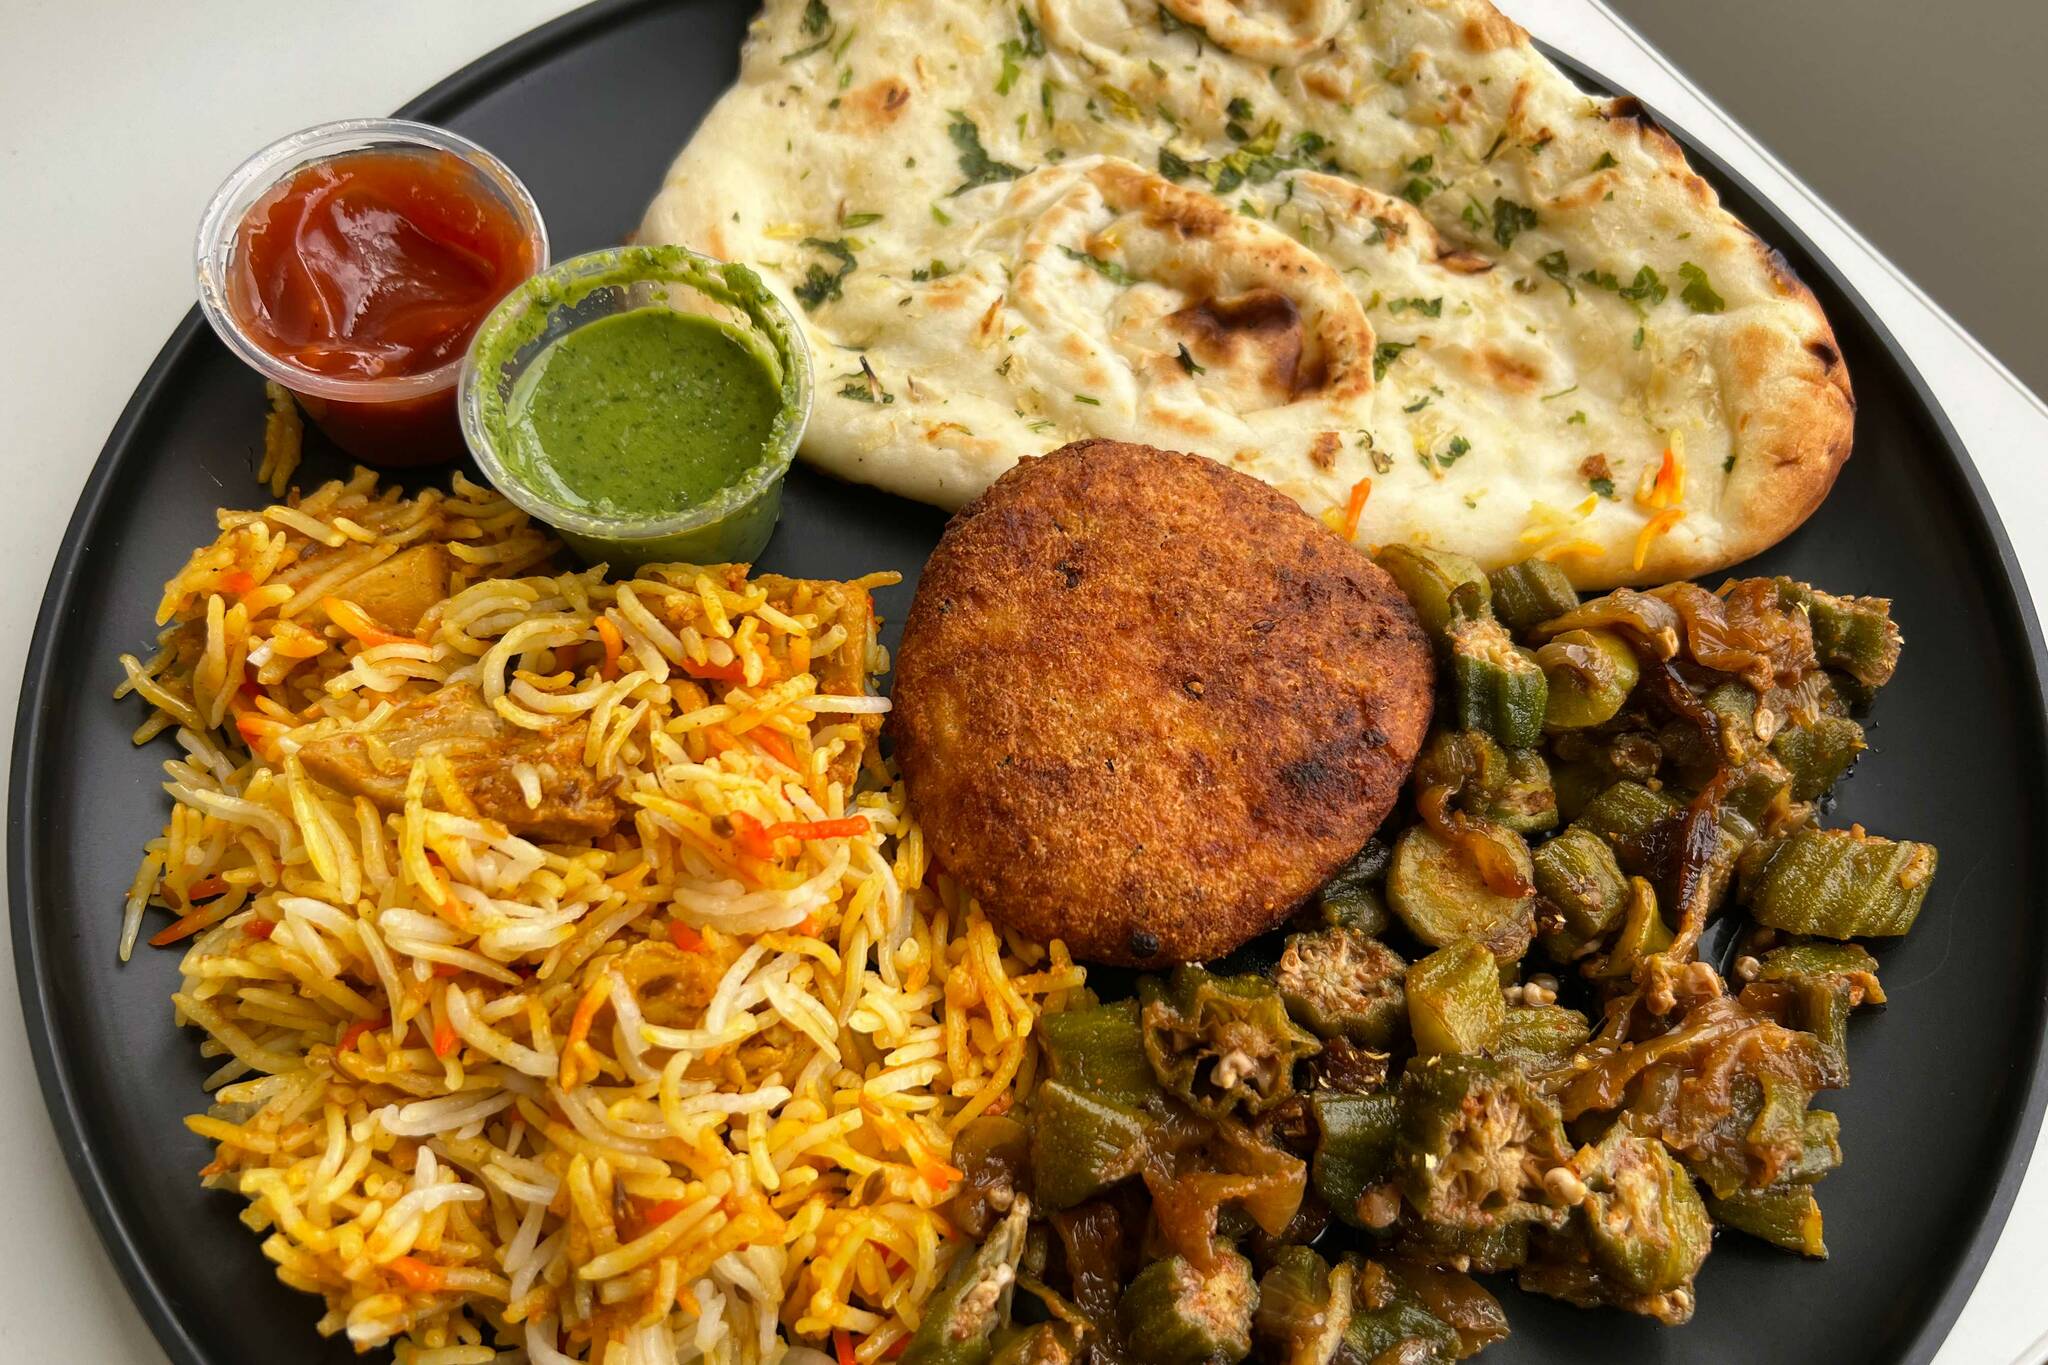 Garlic Naan, Paneer Kebab, Biryani Chicken and Bhindi Masala from Rice-N-Curry (Photo by Cameron Sheppard/Alb Media)